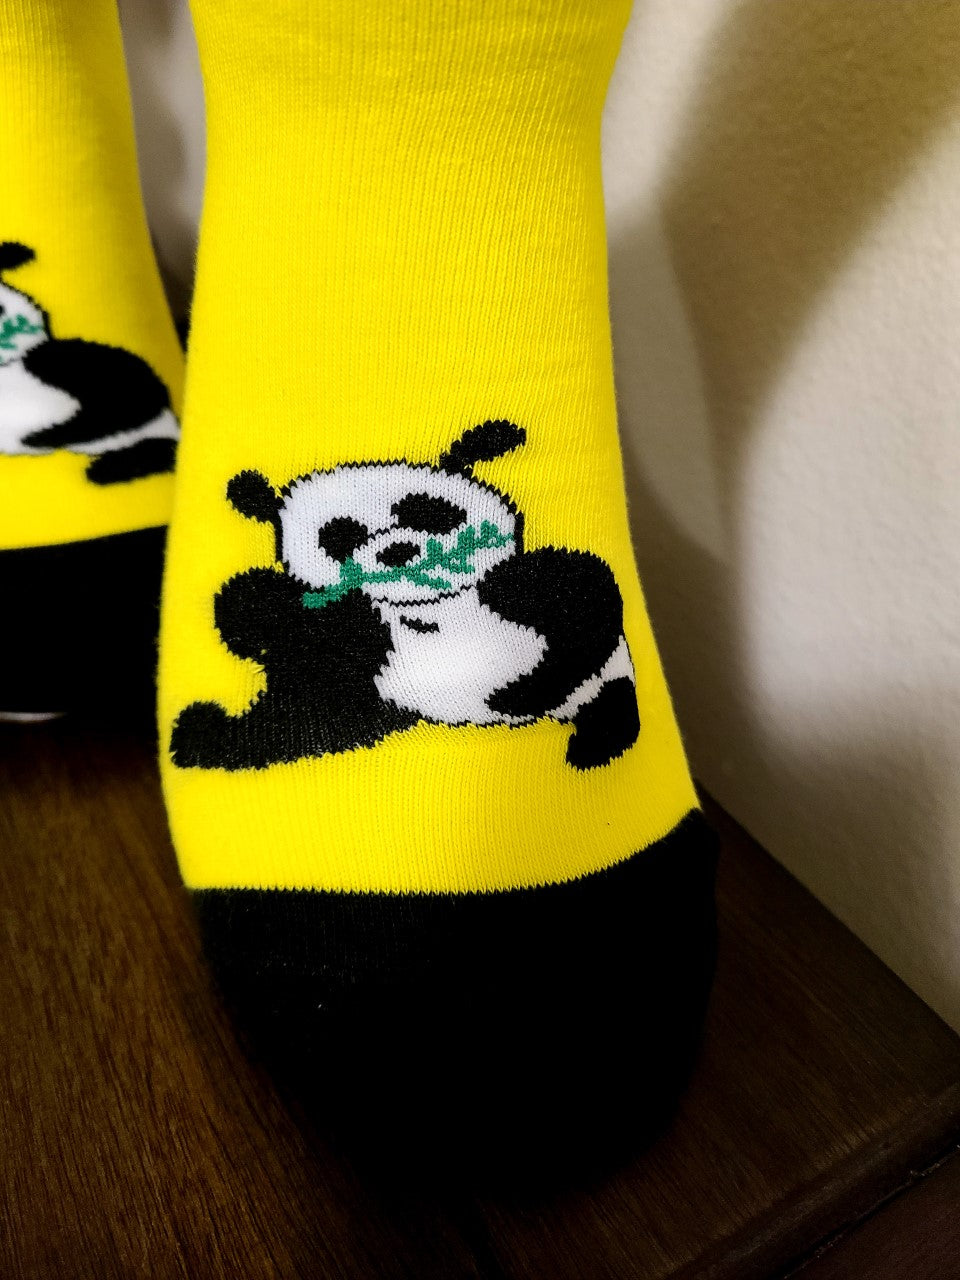 Silly Panda Crew Socks